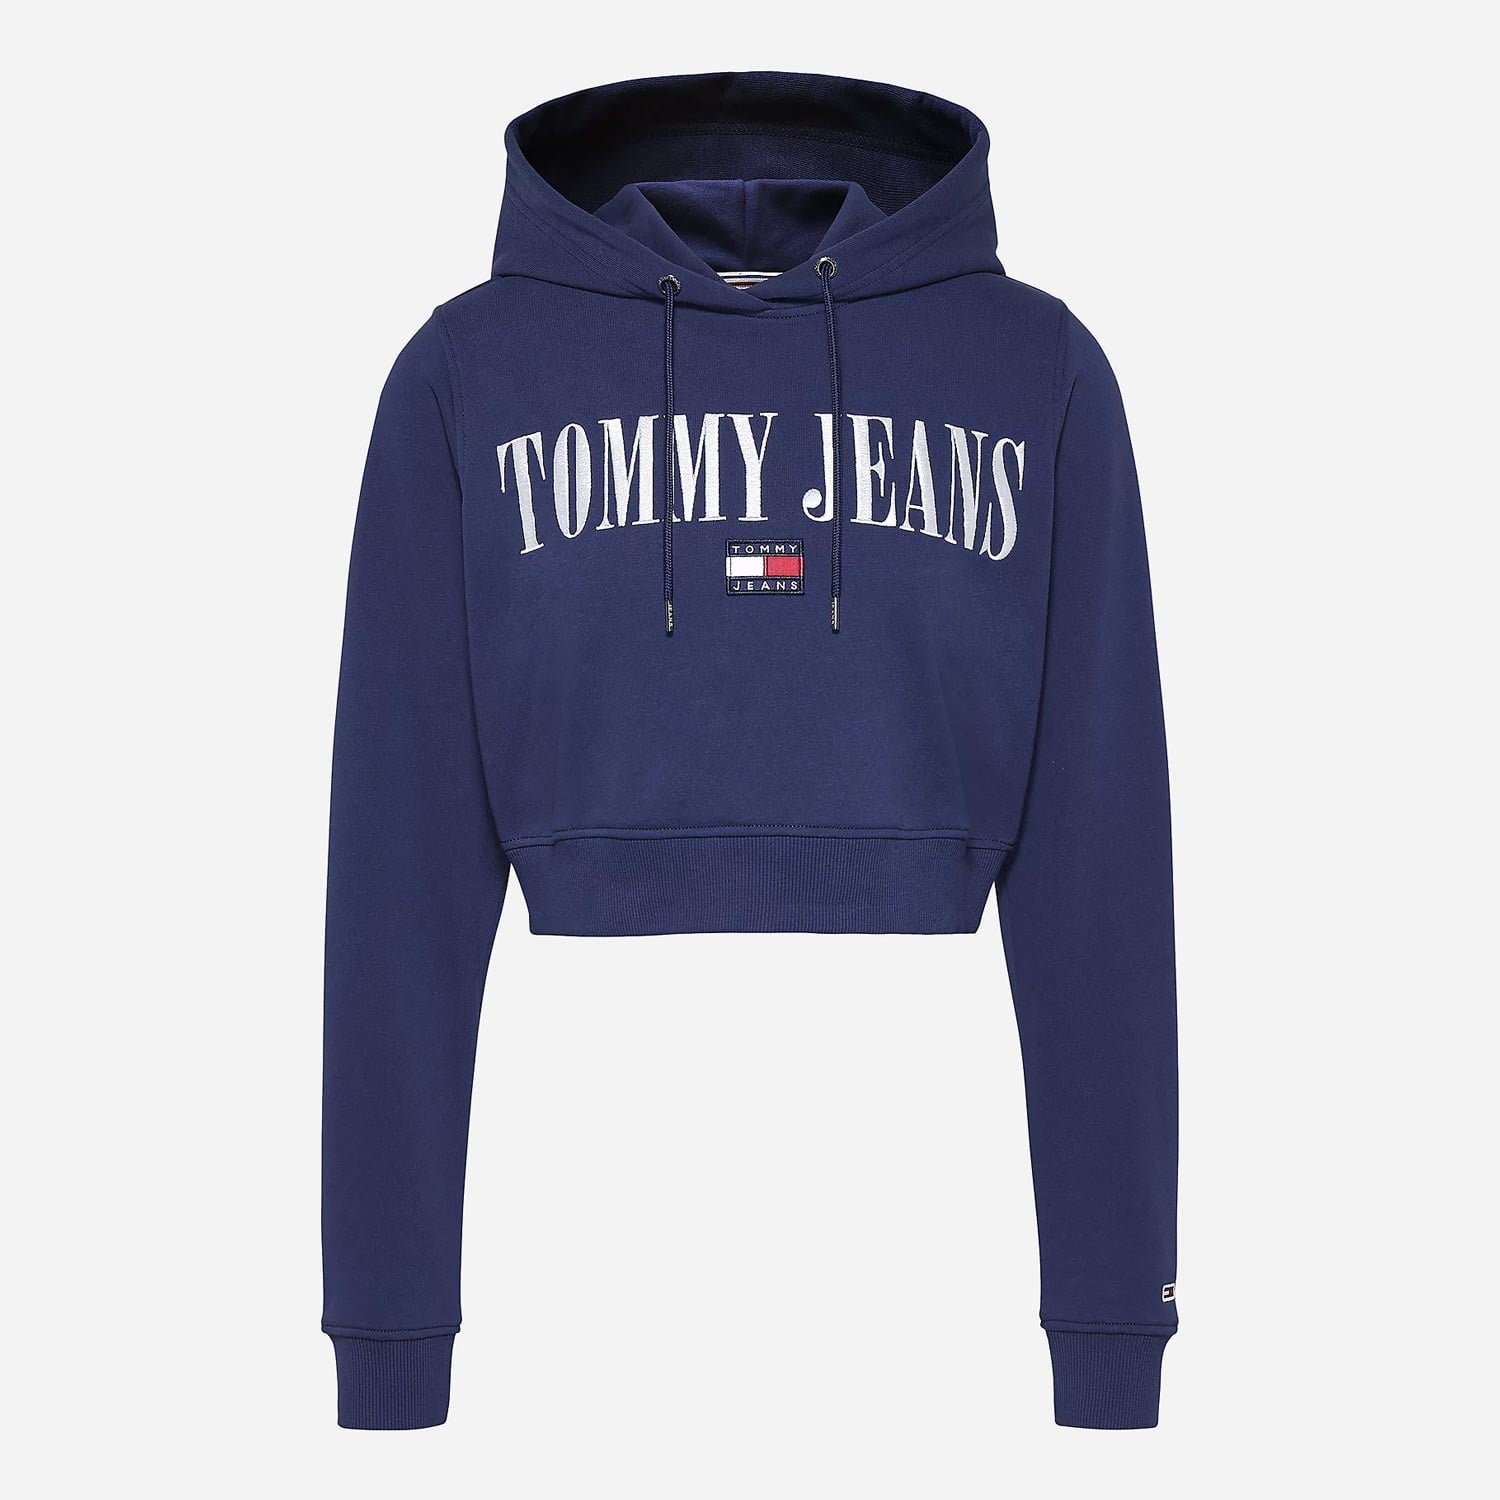 Tommy Jeans Women's Crop Archive 2 Hoodie - Twilight Navy